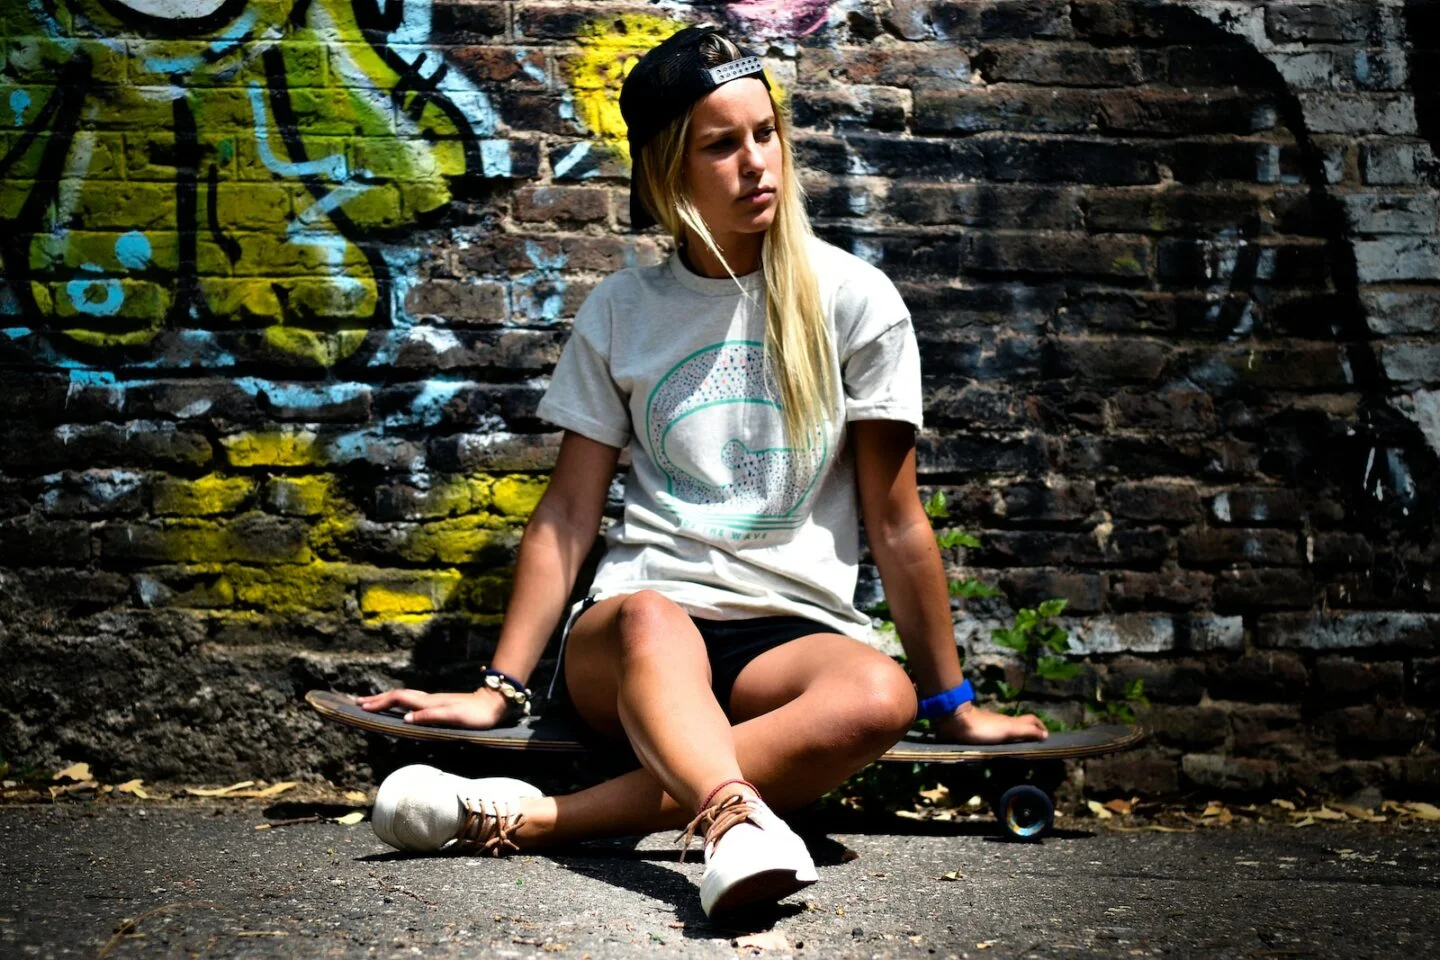 woman in white shirt sitting on skateboard